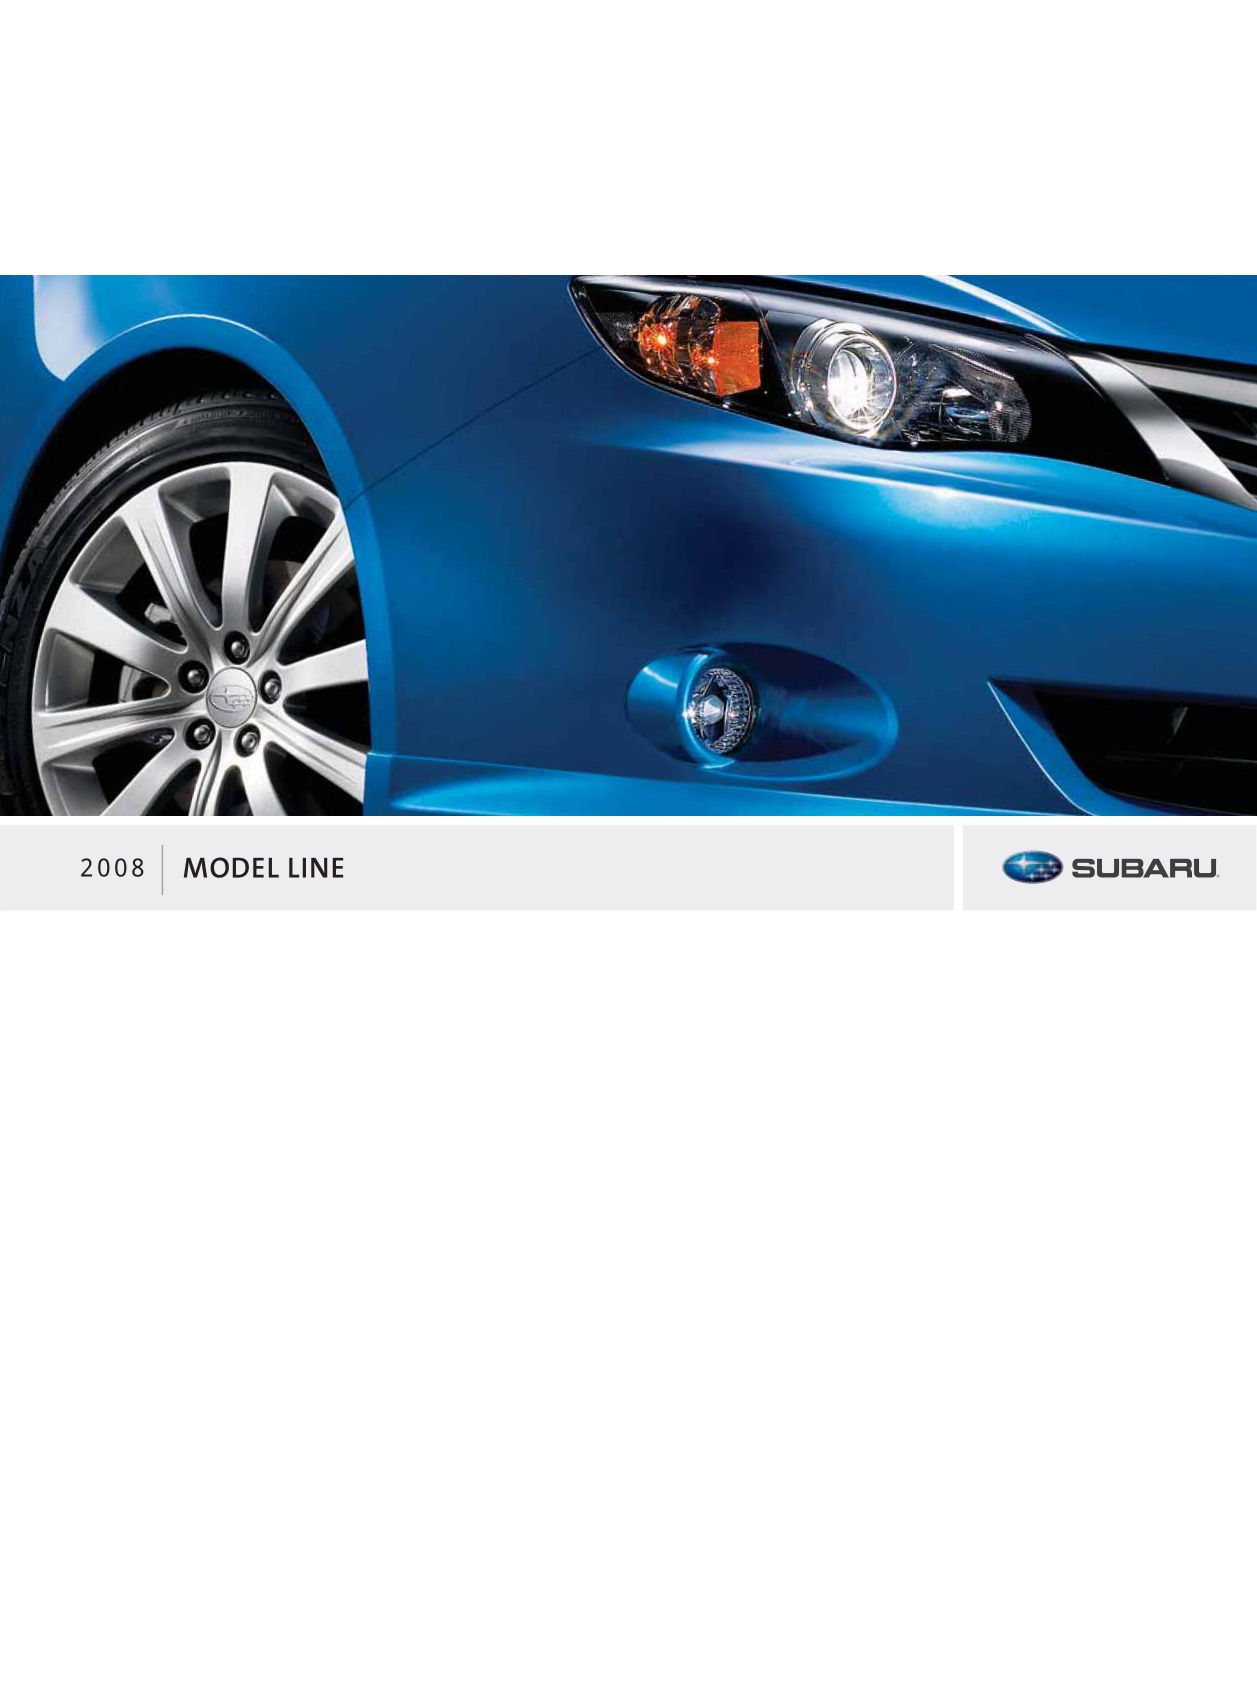 2008 Subaru All Models Brochure